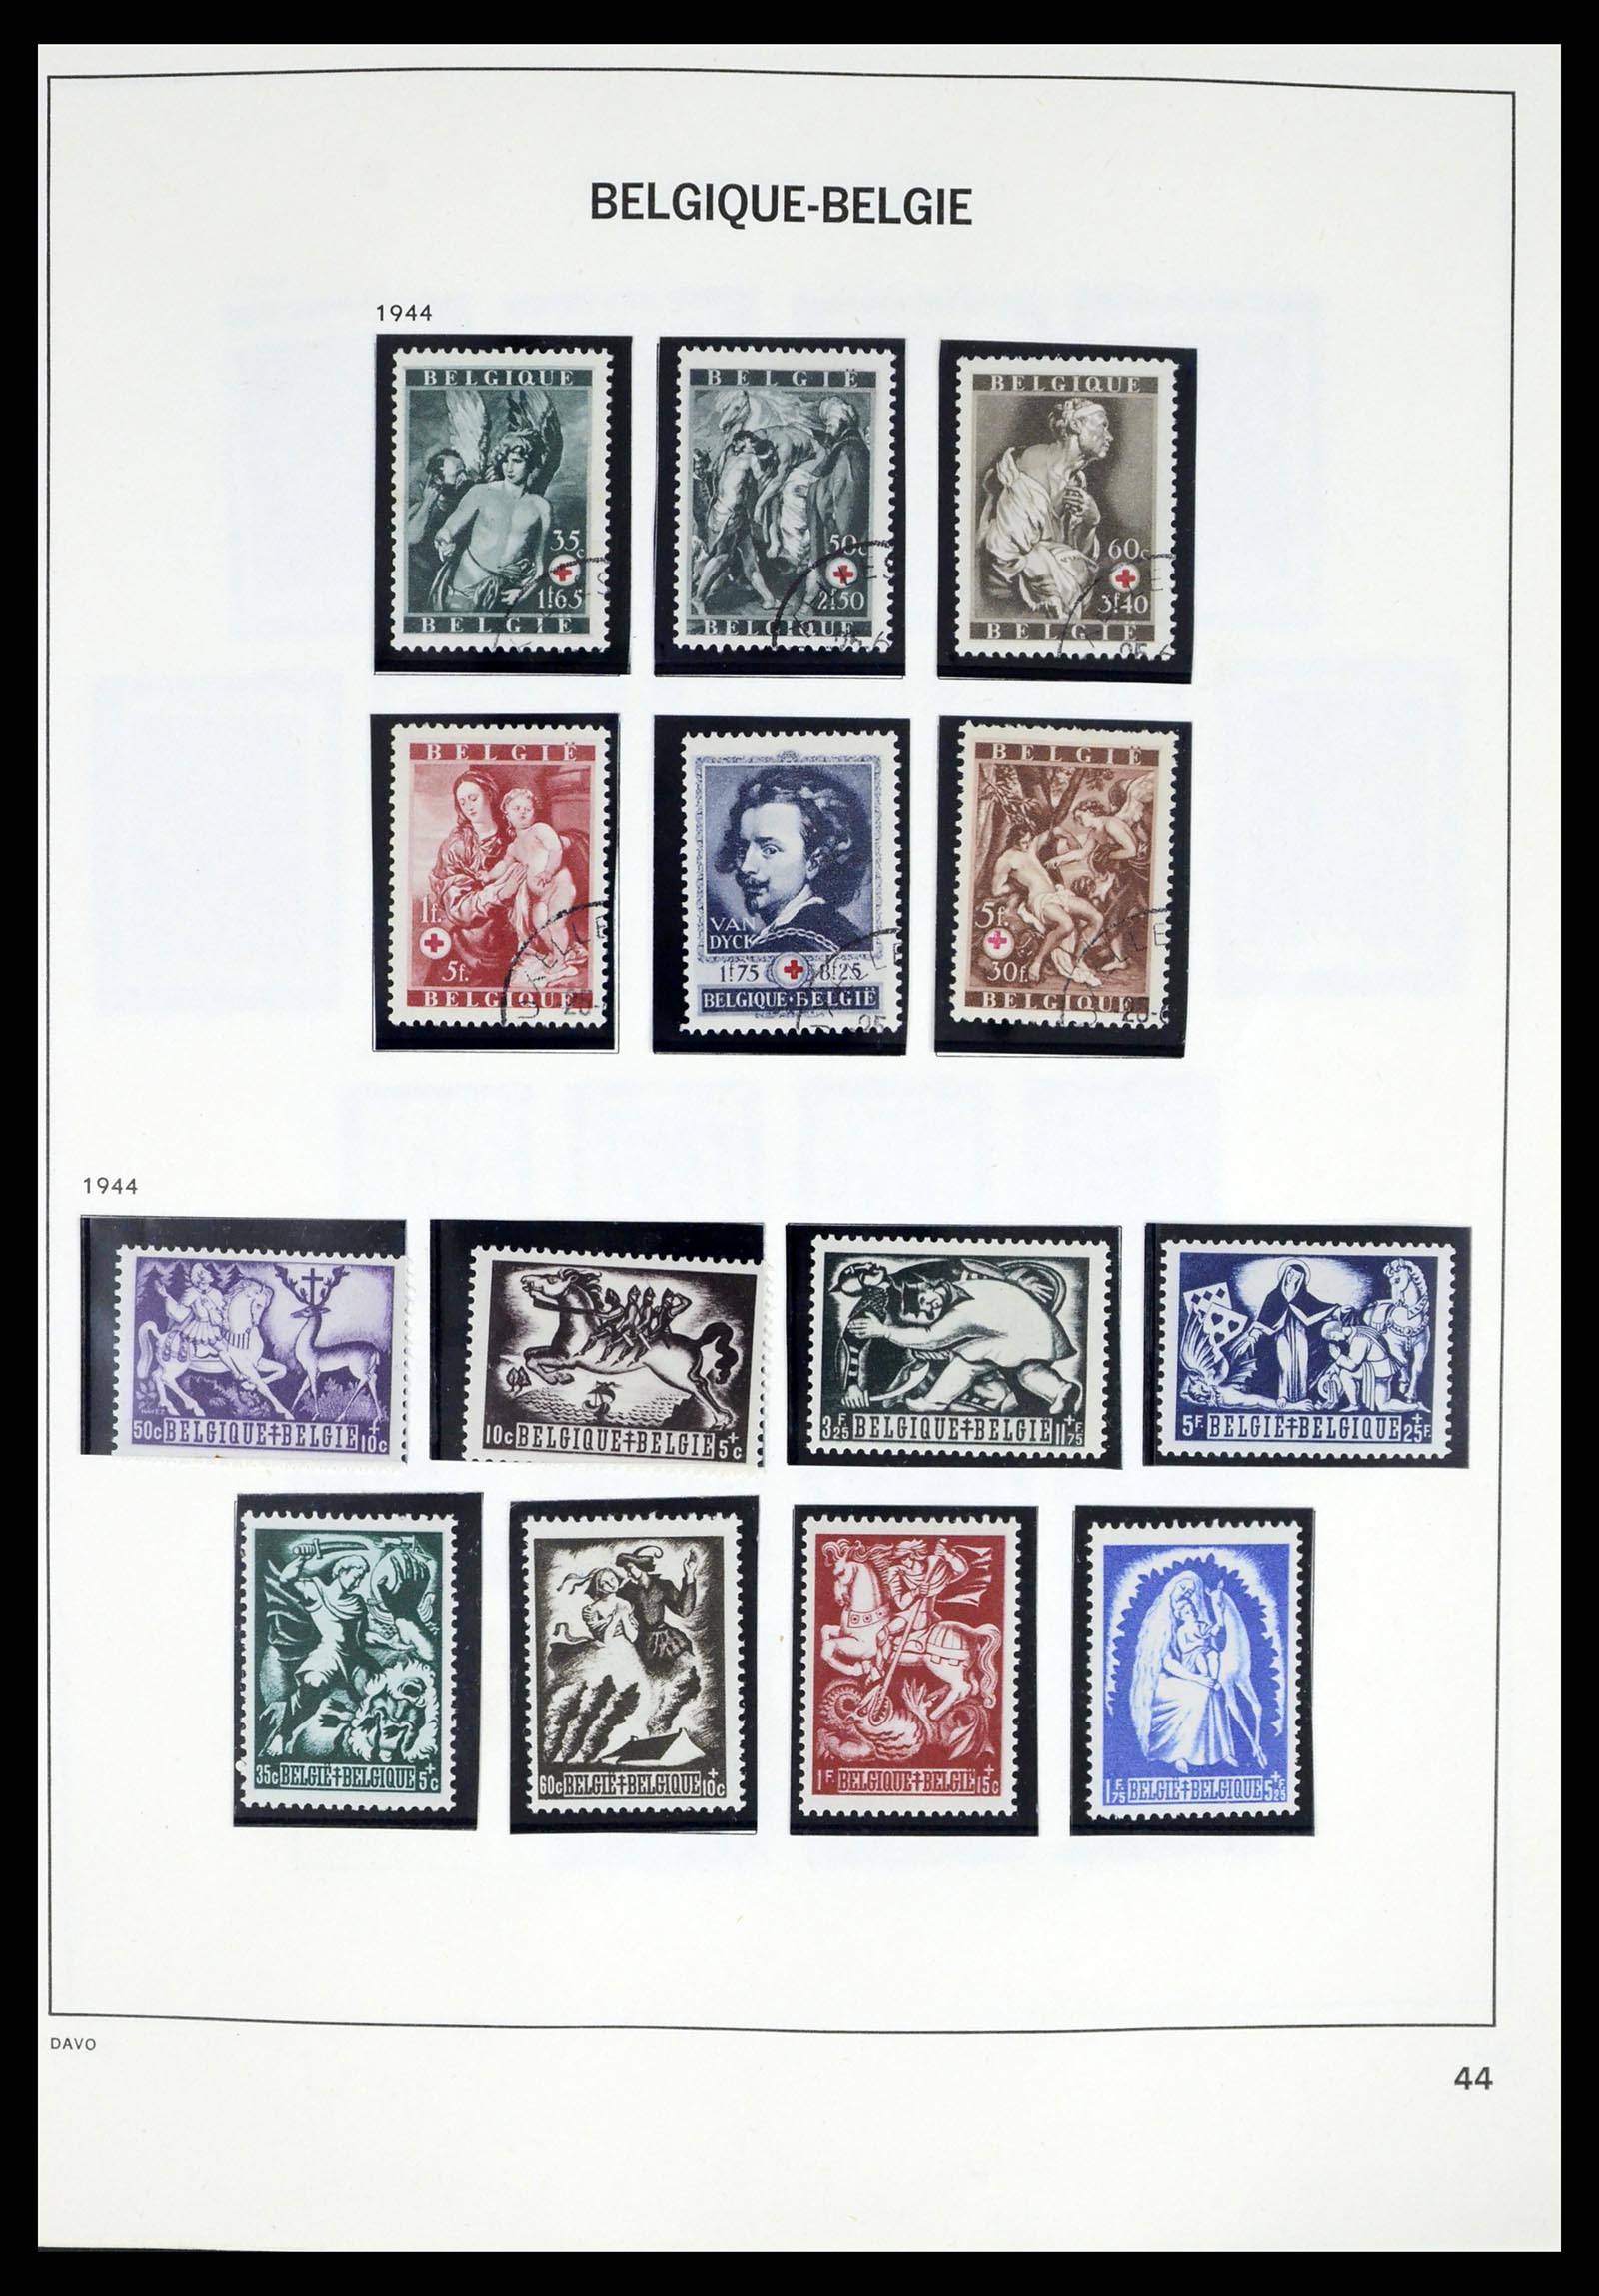 37367 042 - Stamp collection 37367 Belgium 1849-2003.